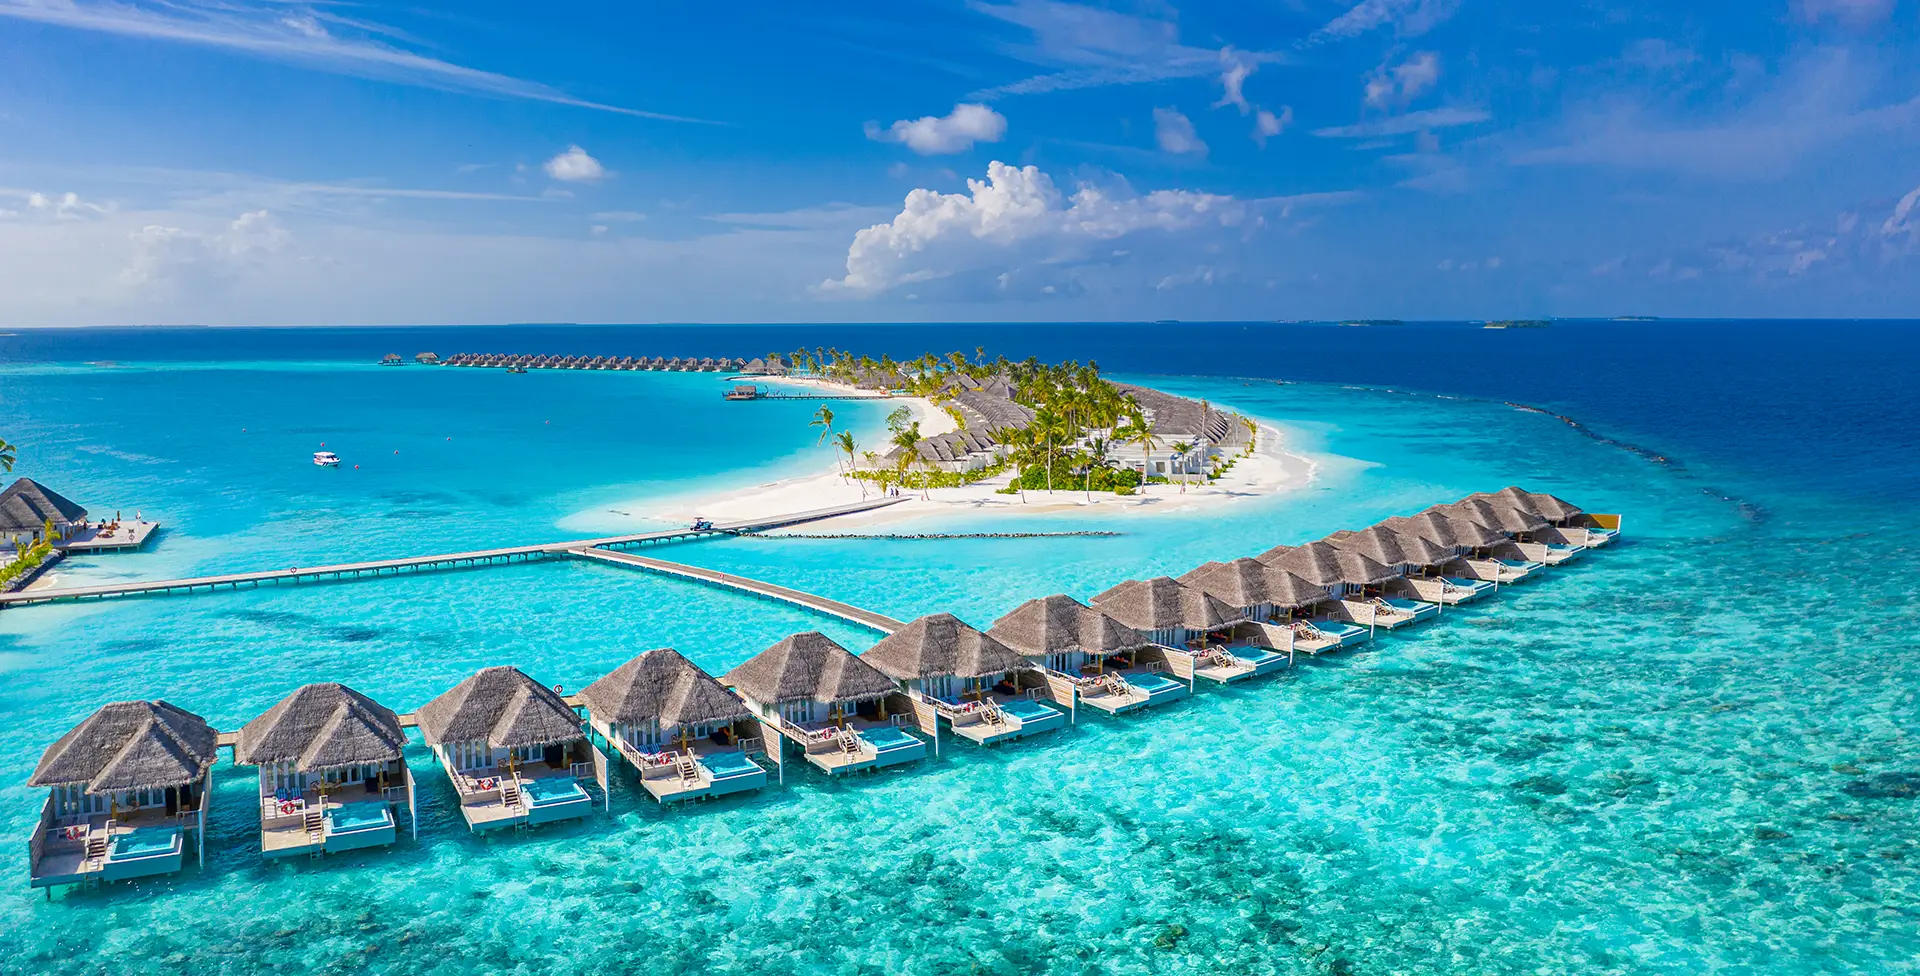 maldives-passport-visa-free-countries-list